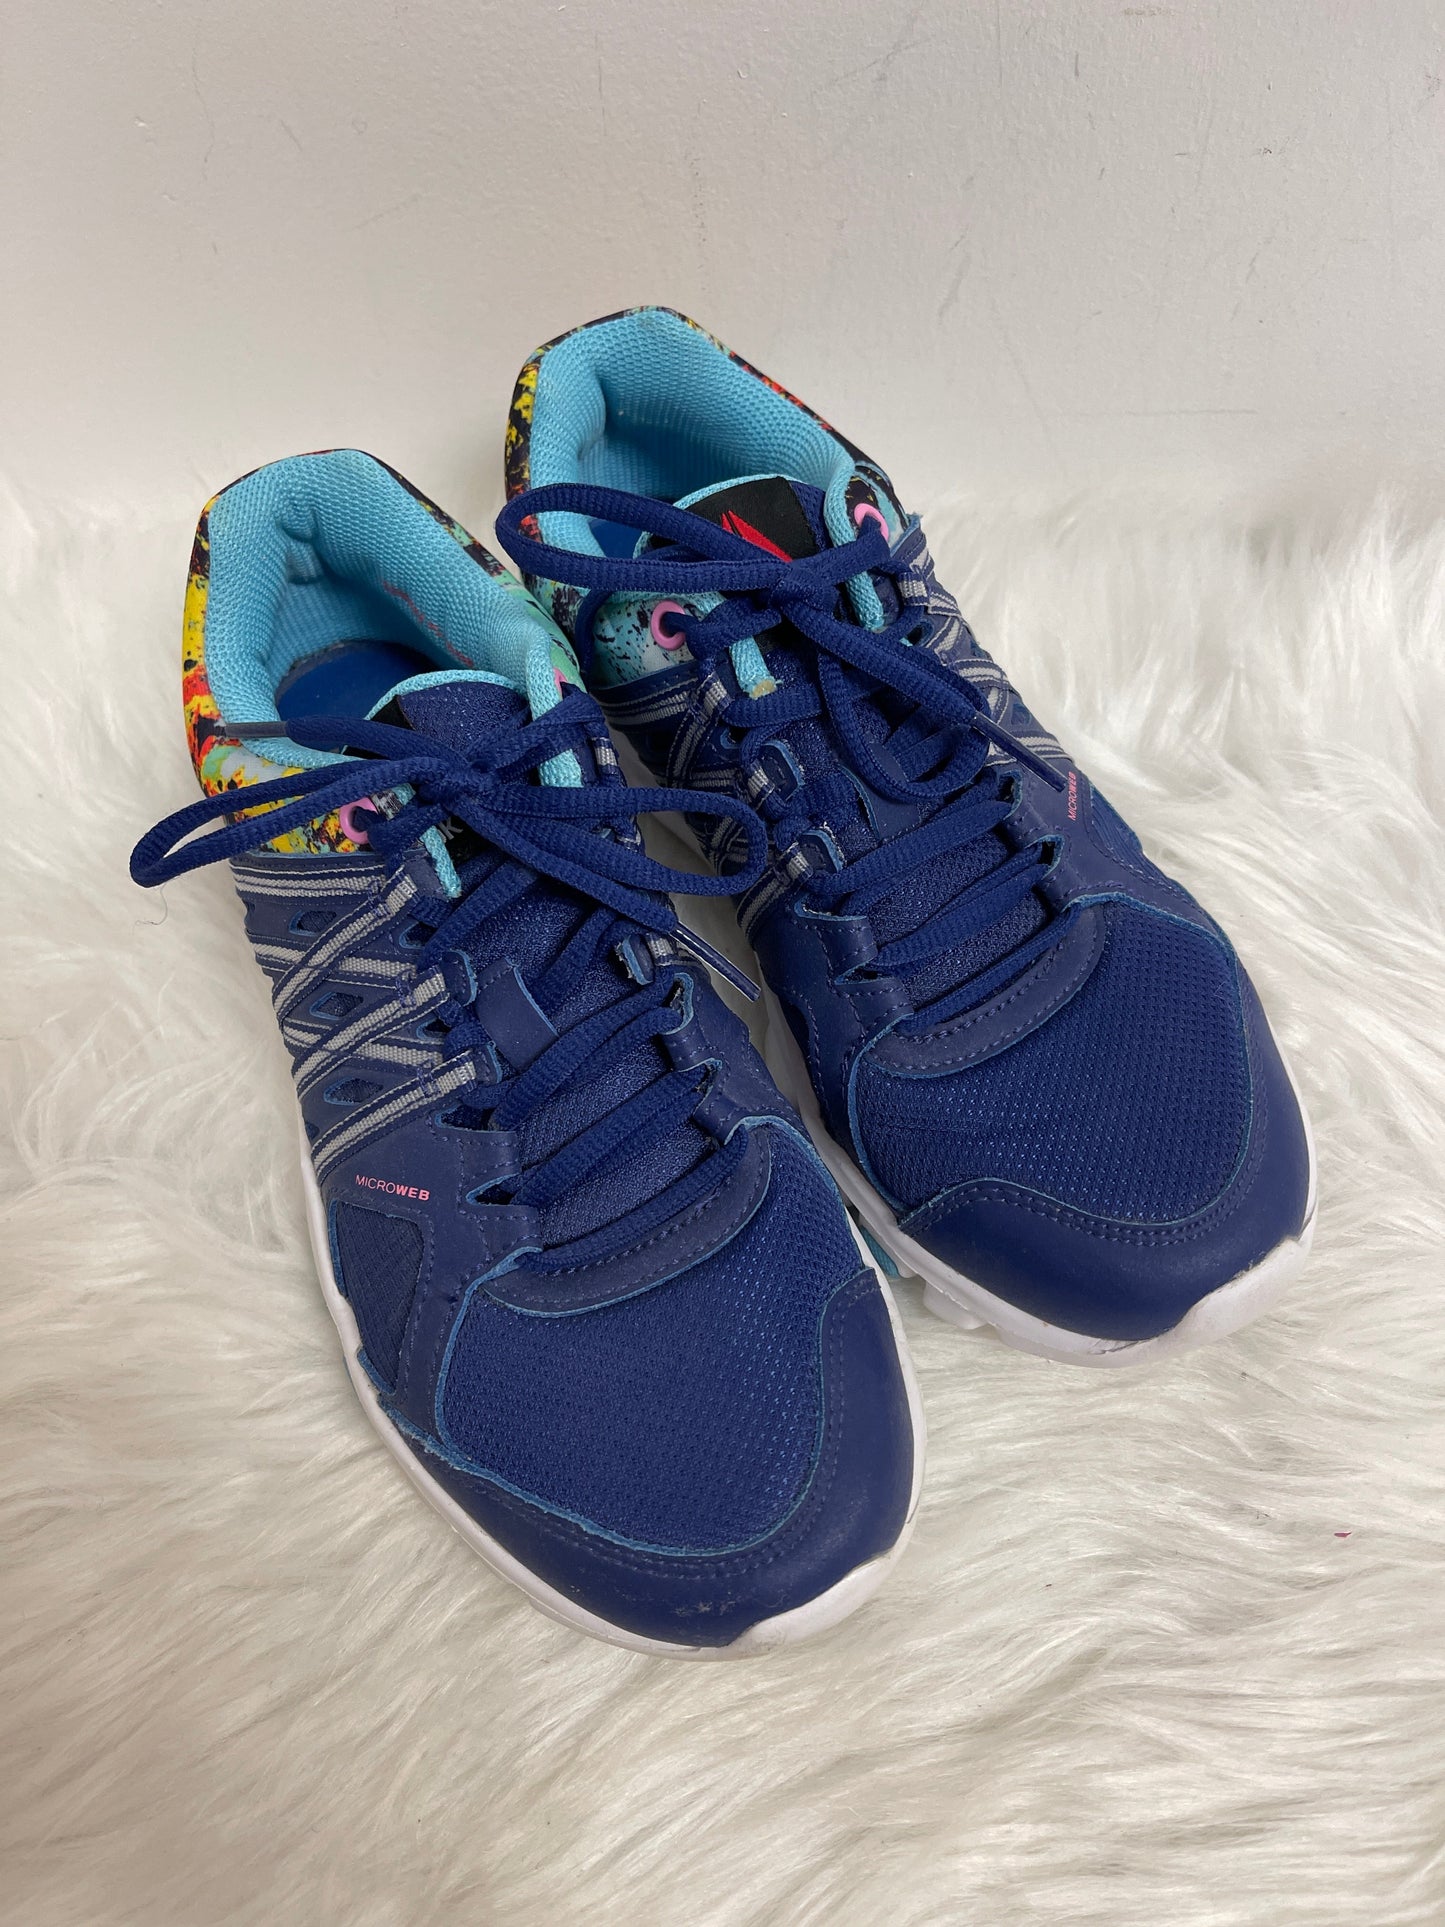 Blue Shoes Athletic Reebok, Size 6